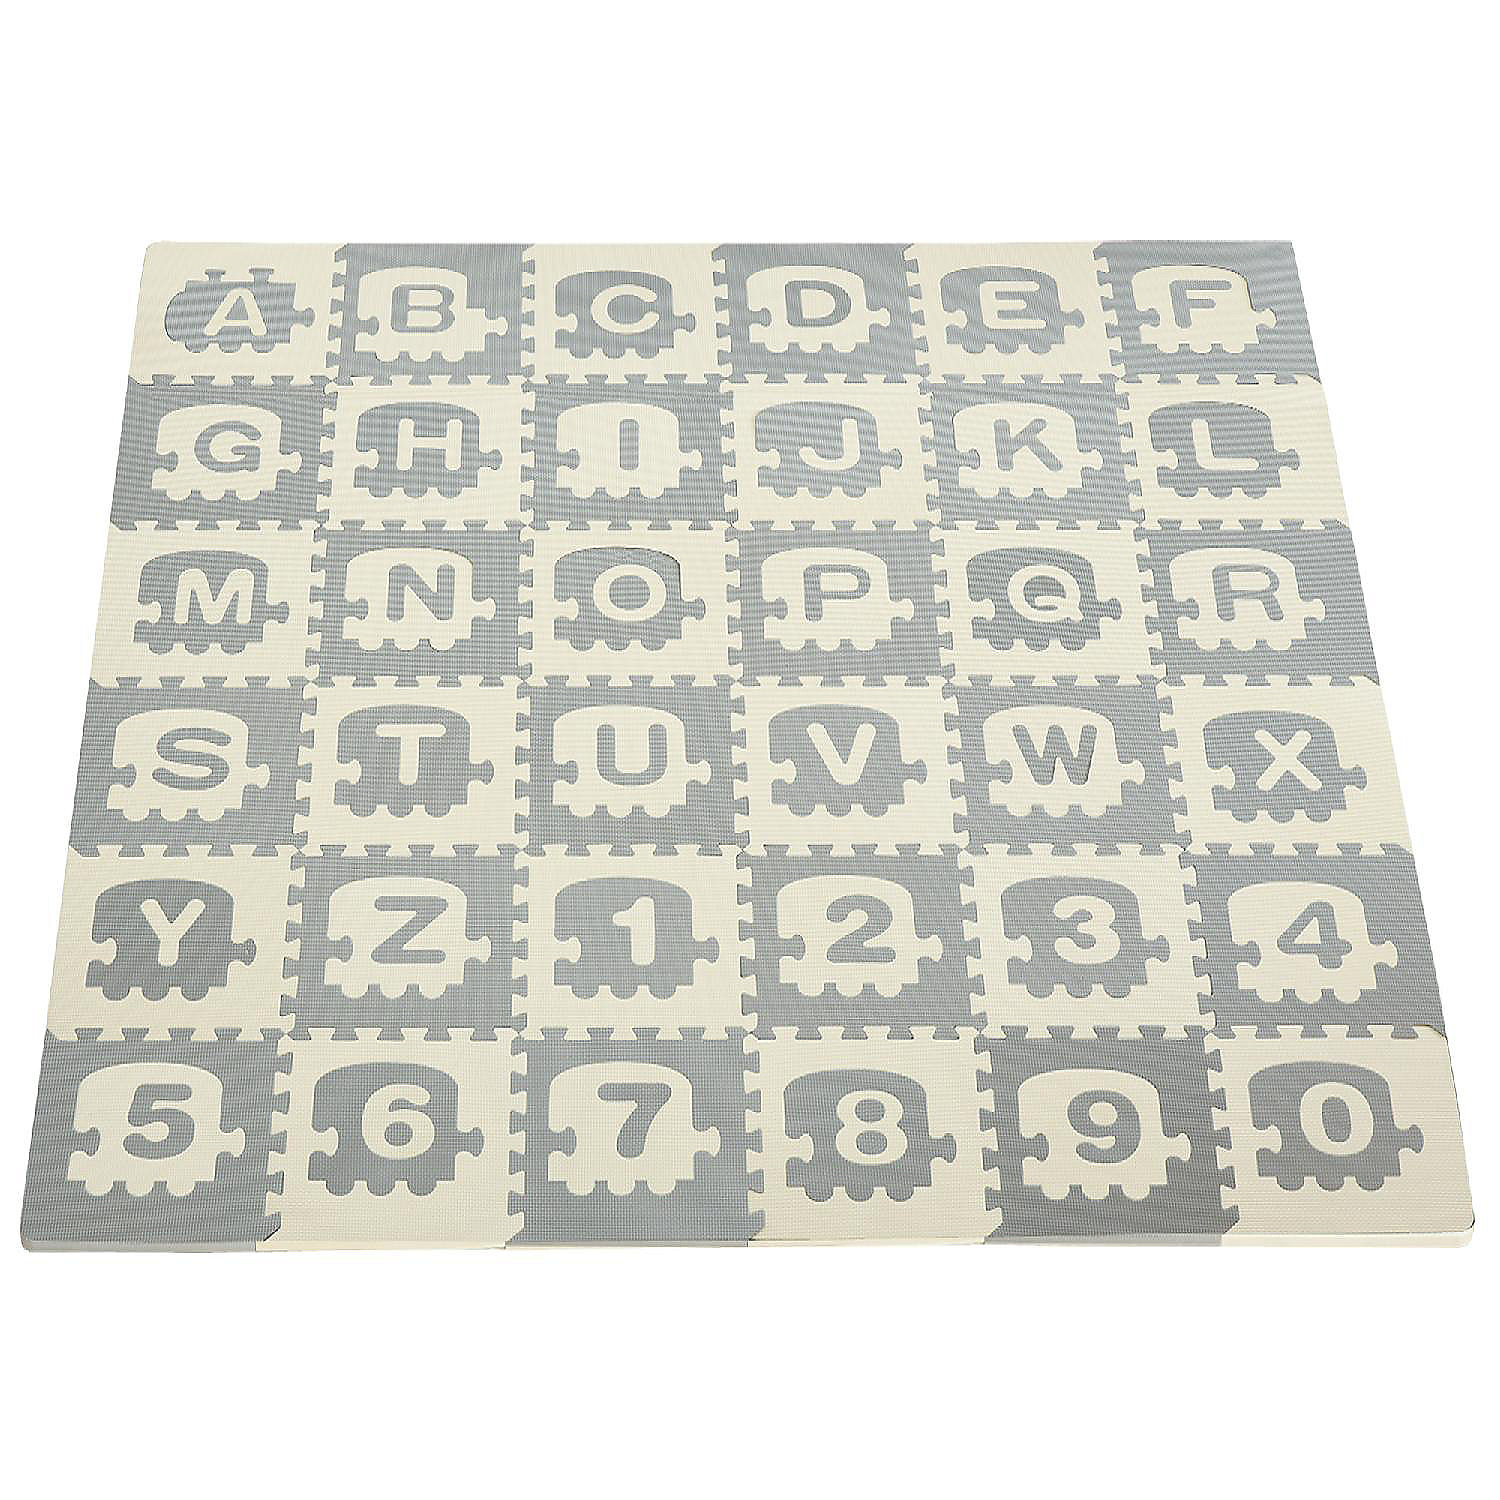 10Pc Eva  Soft Kids Baby Puzzle Exercise Mat Tiles Floor Carpet 